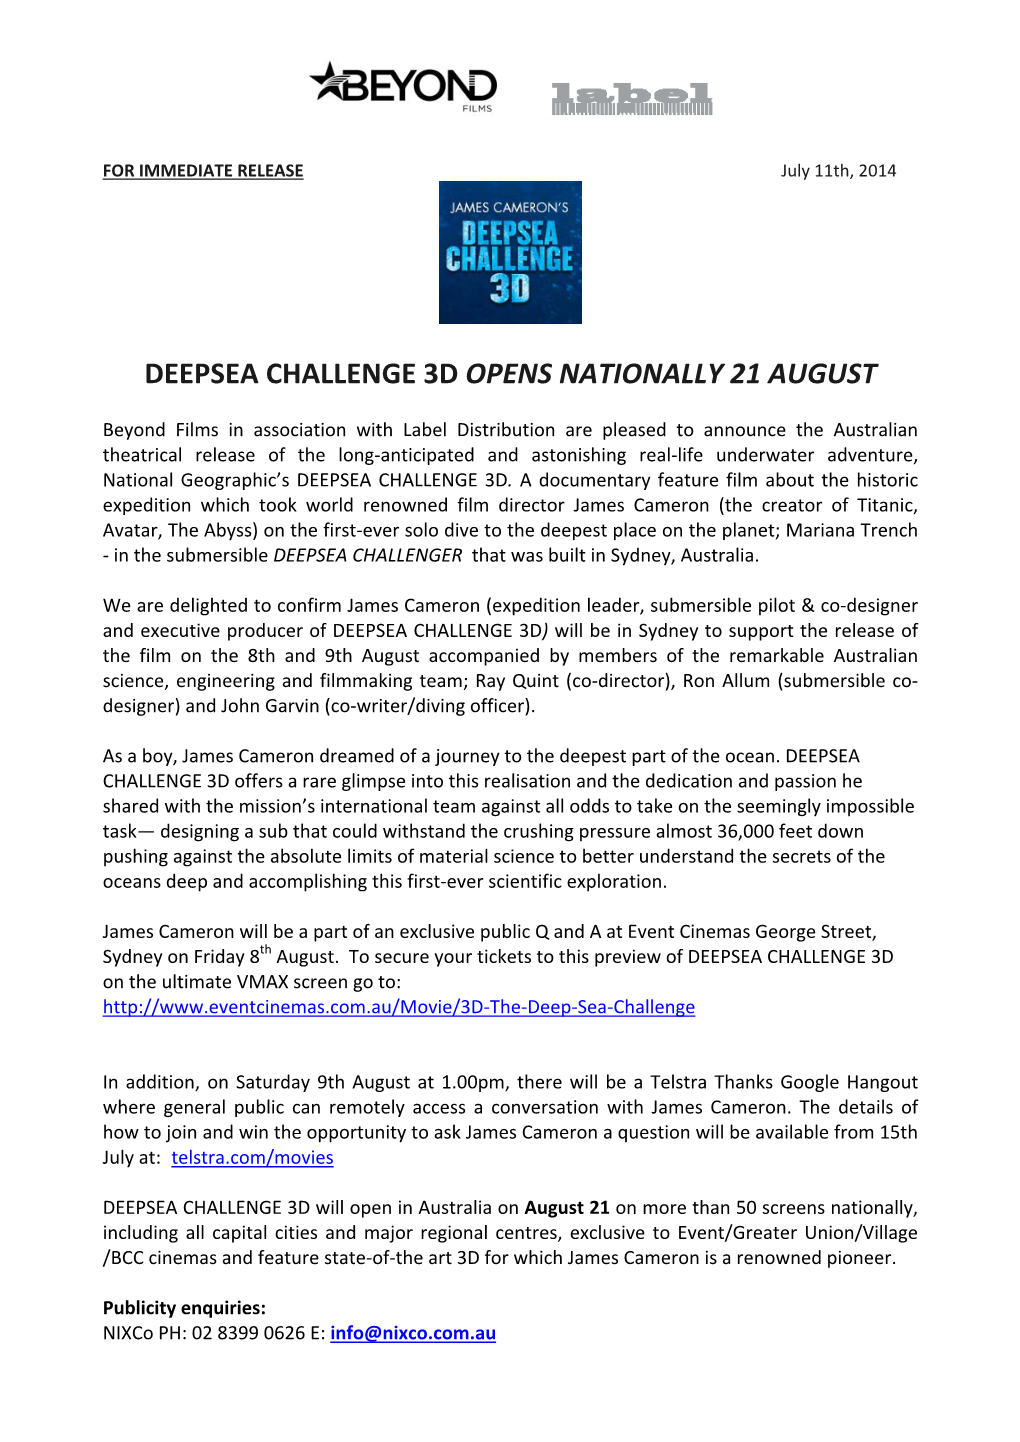 Deepsea Challenge 3D Opens Nationally 21 August